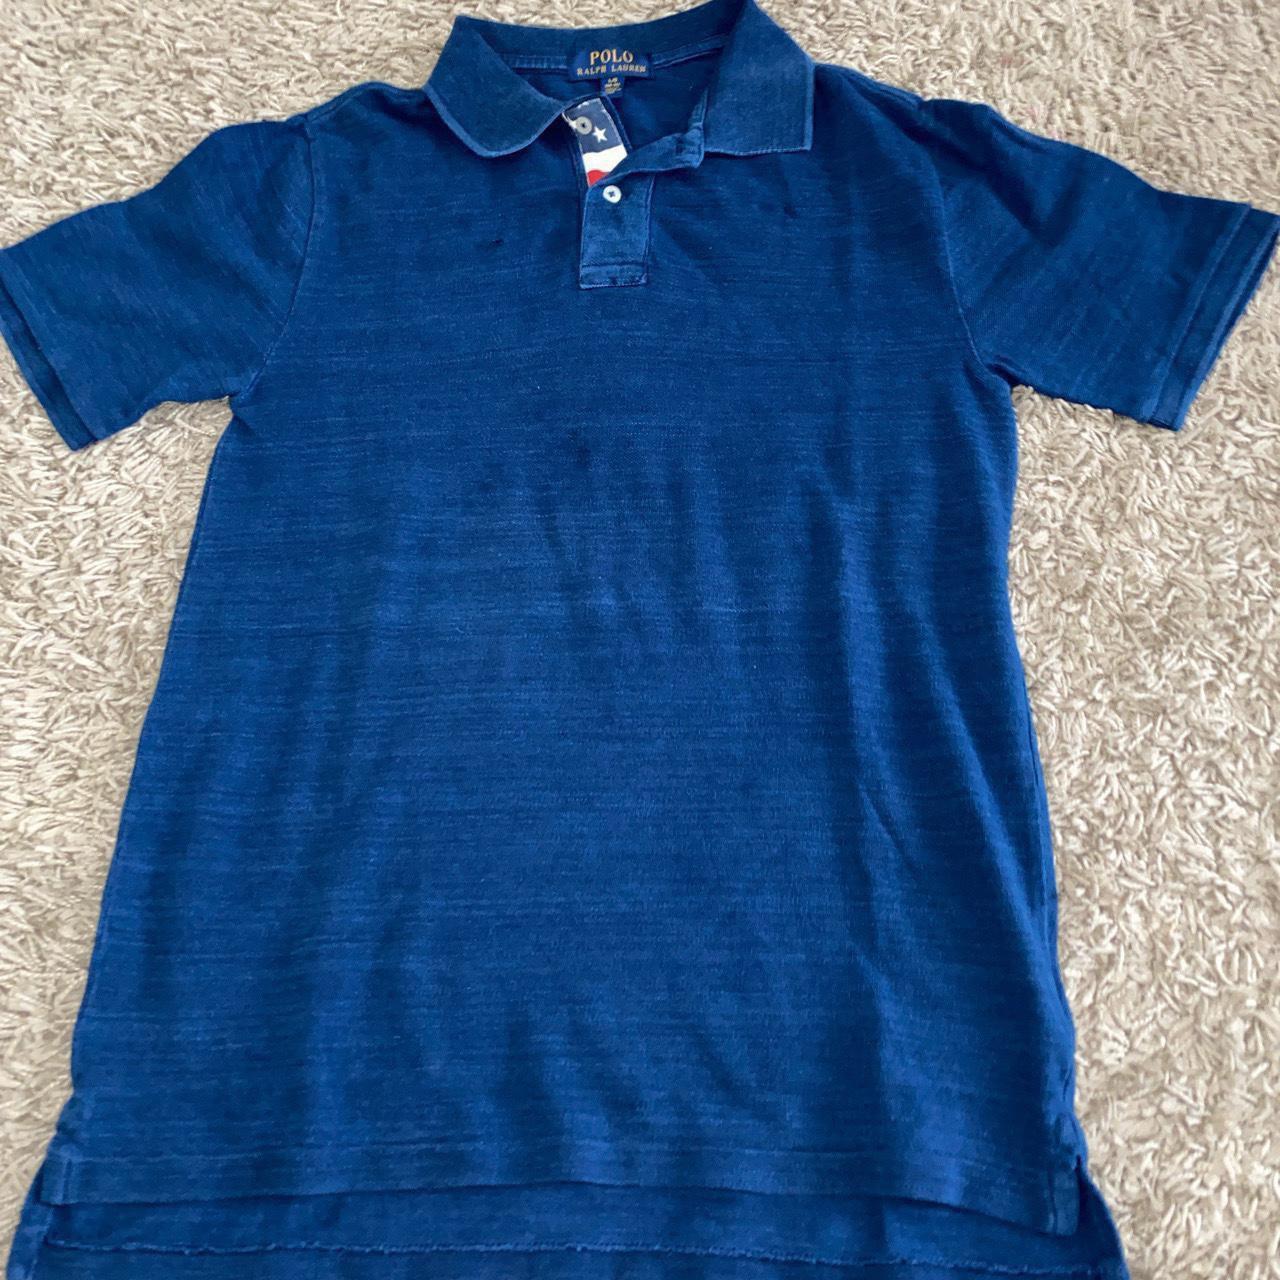 Polo Ralph Lauren polo shirt Size 14-16 years in... - Depop